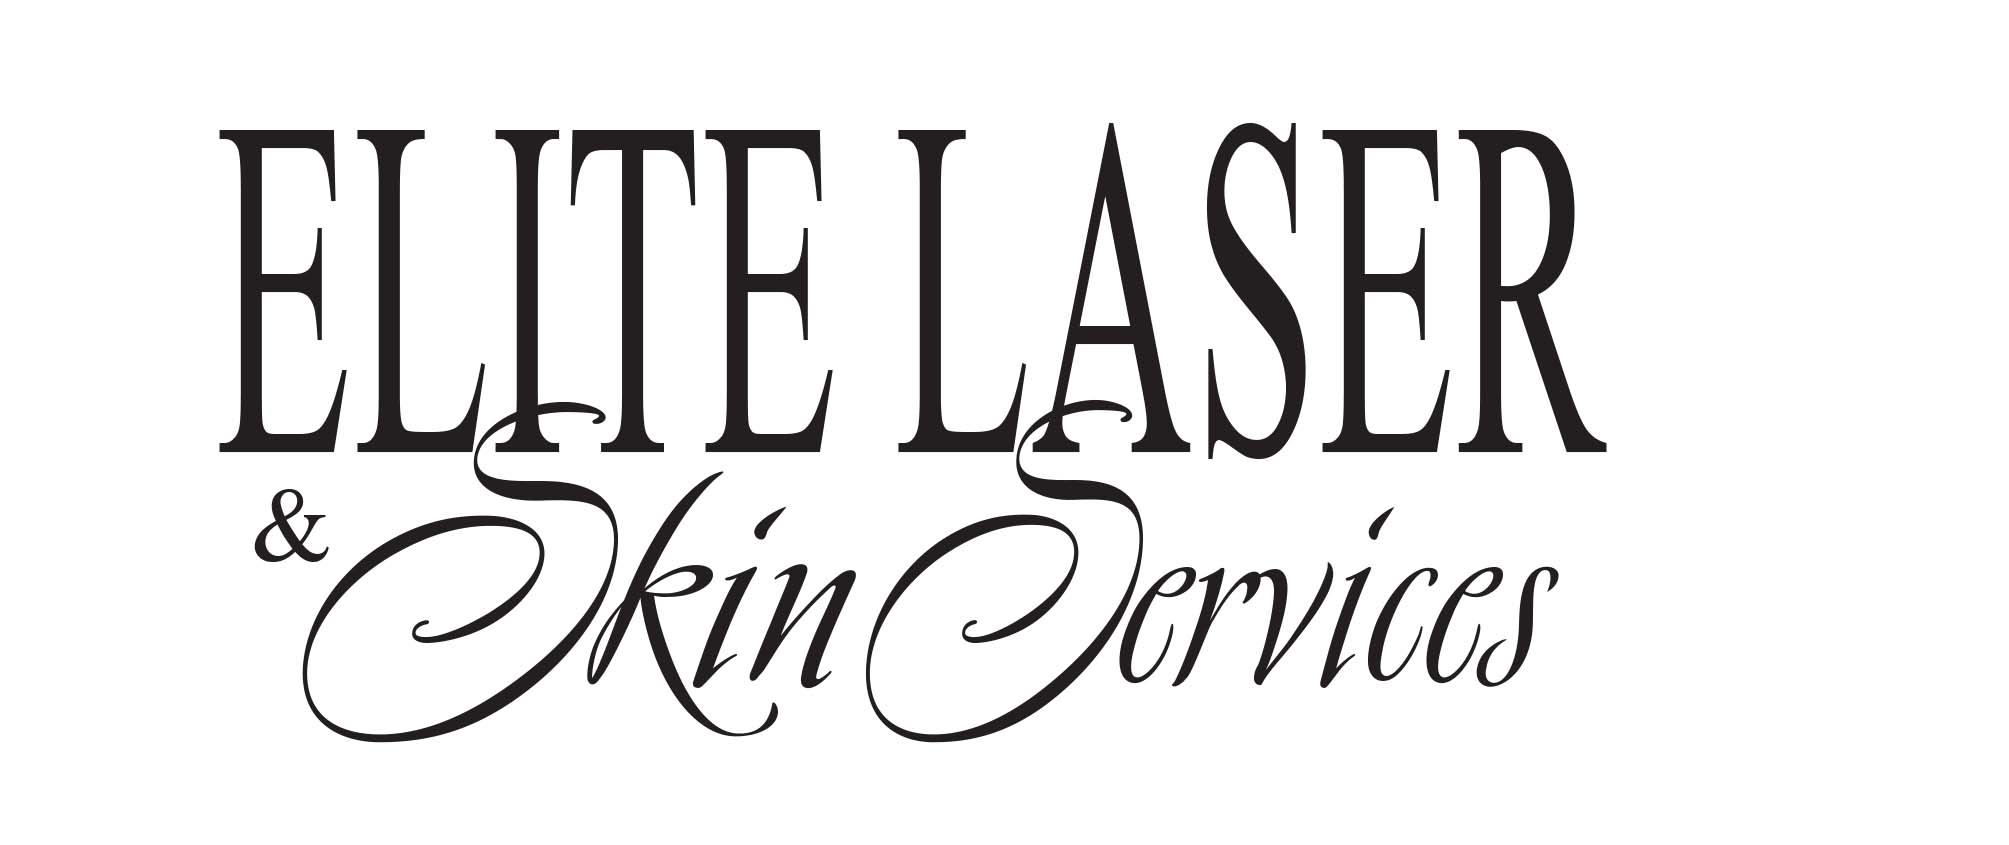 Laser hair removal Gilbert, Laser hair removal Mesa,